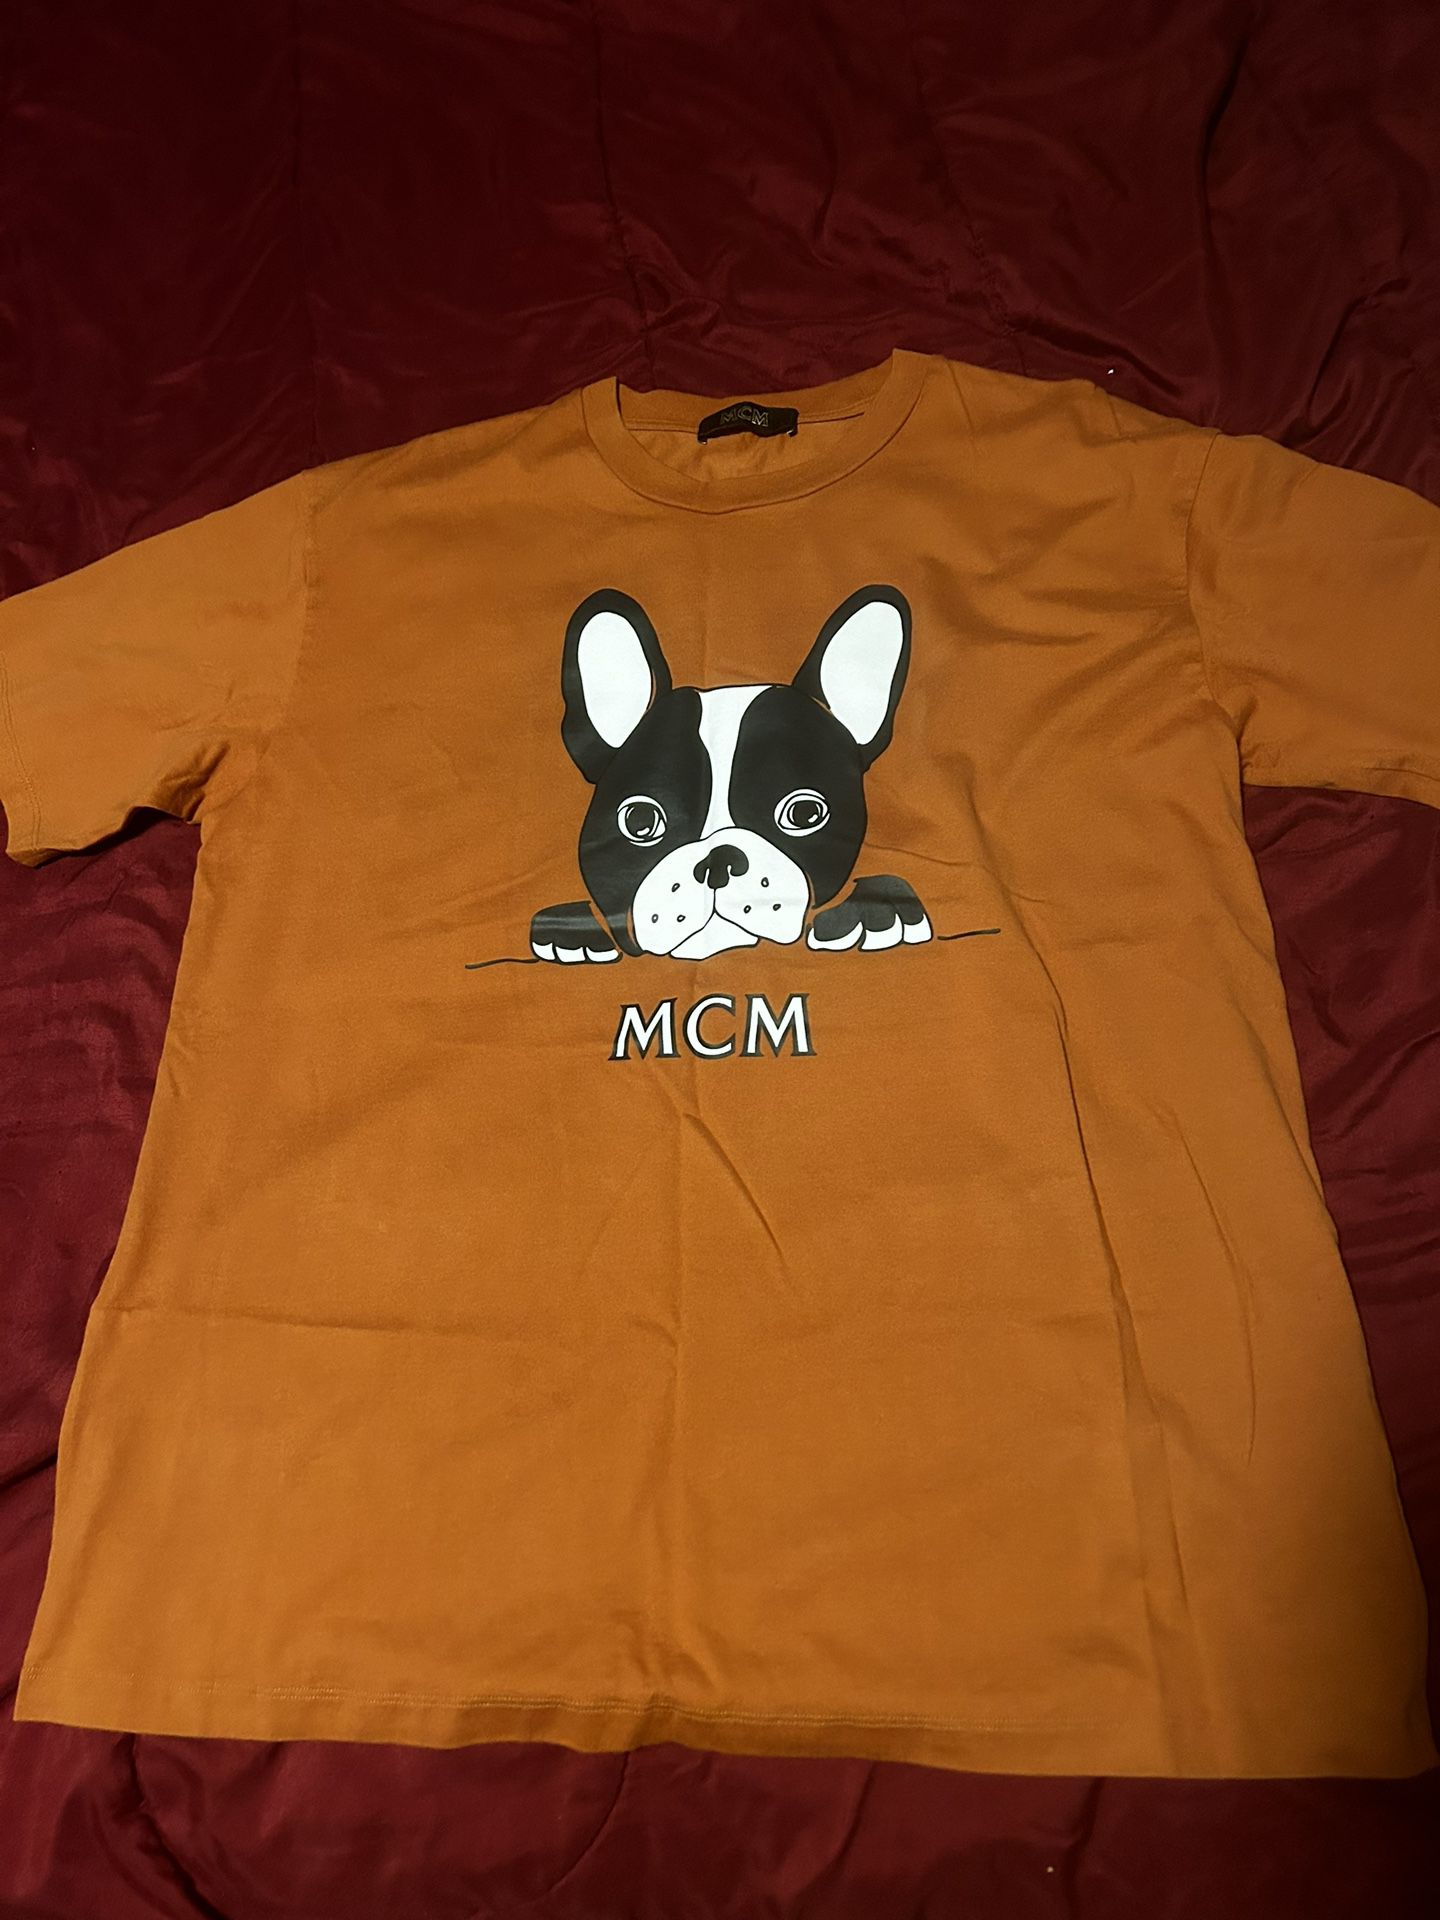 MCM shirt XL